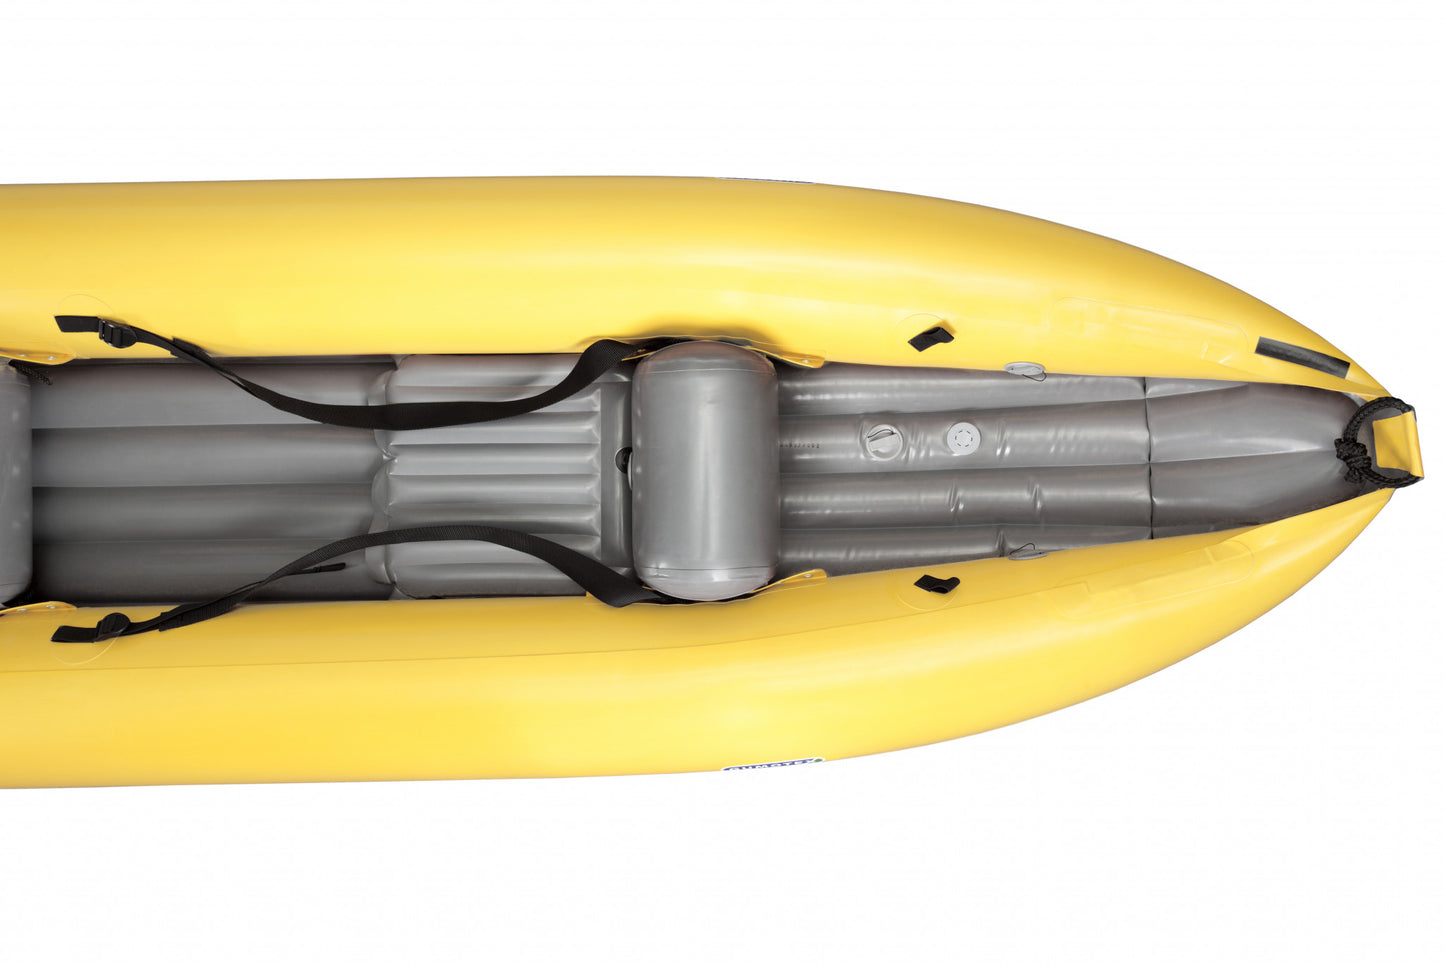 Gumotex K2 Inflatable Kayak